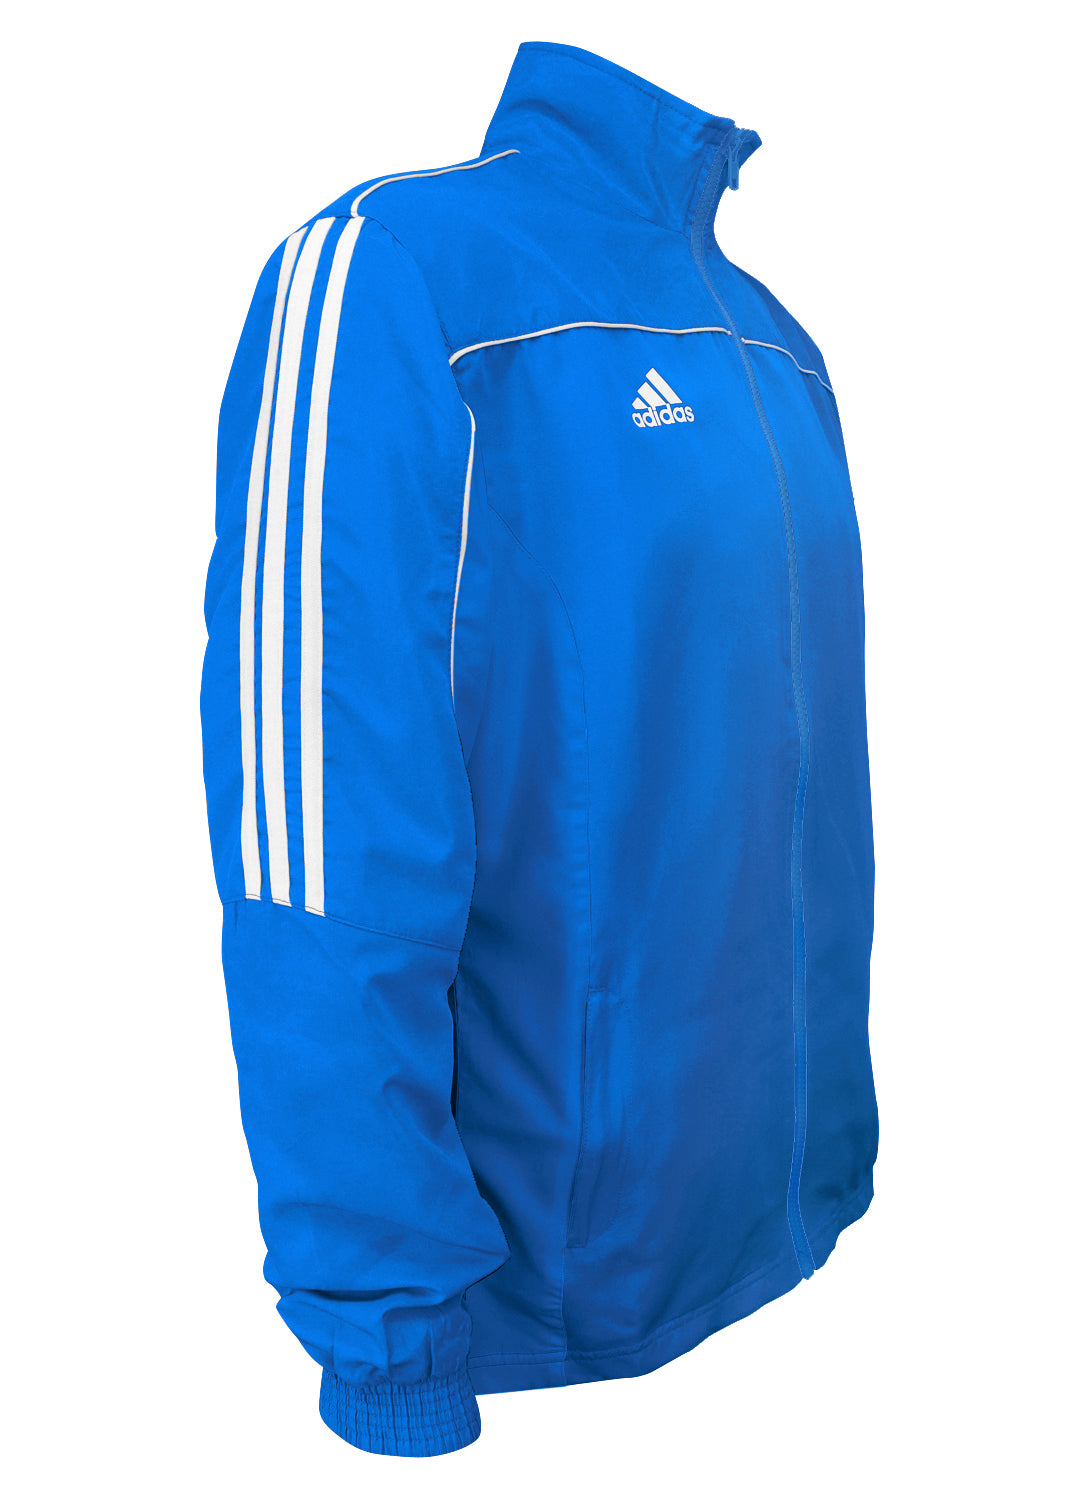 adidas jacket blue with white stripes